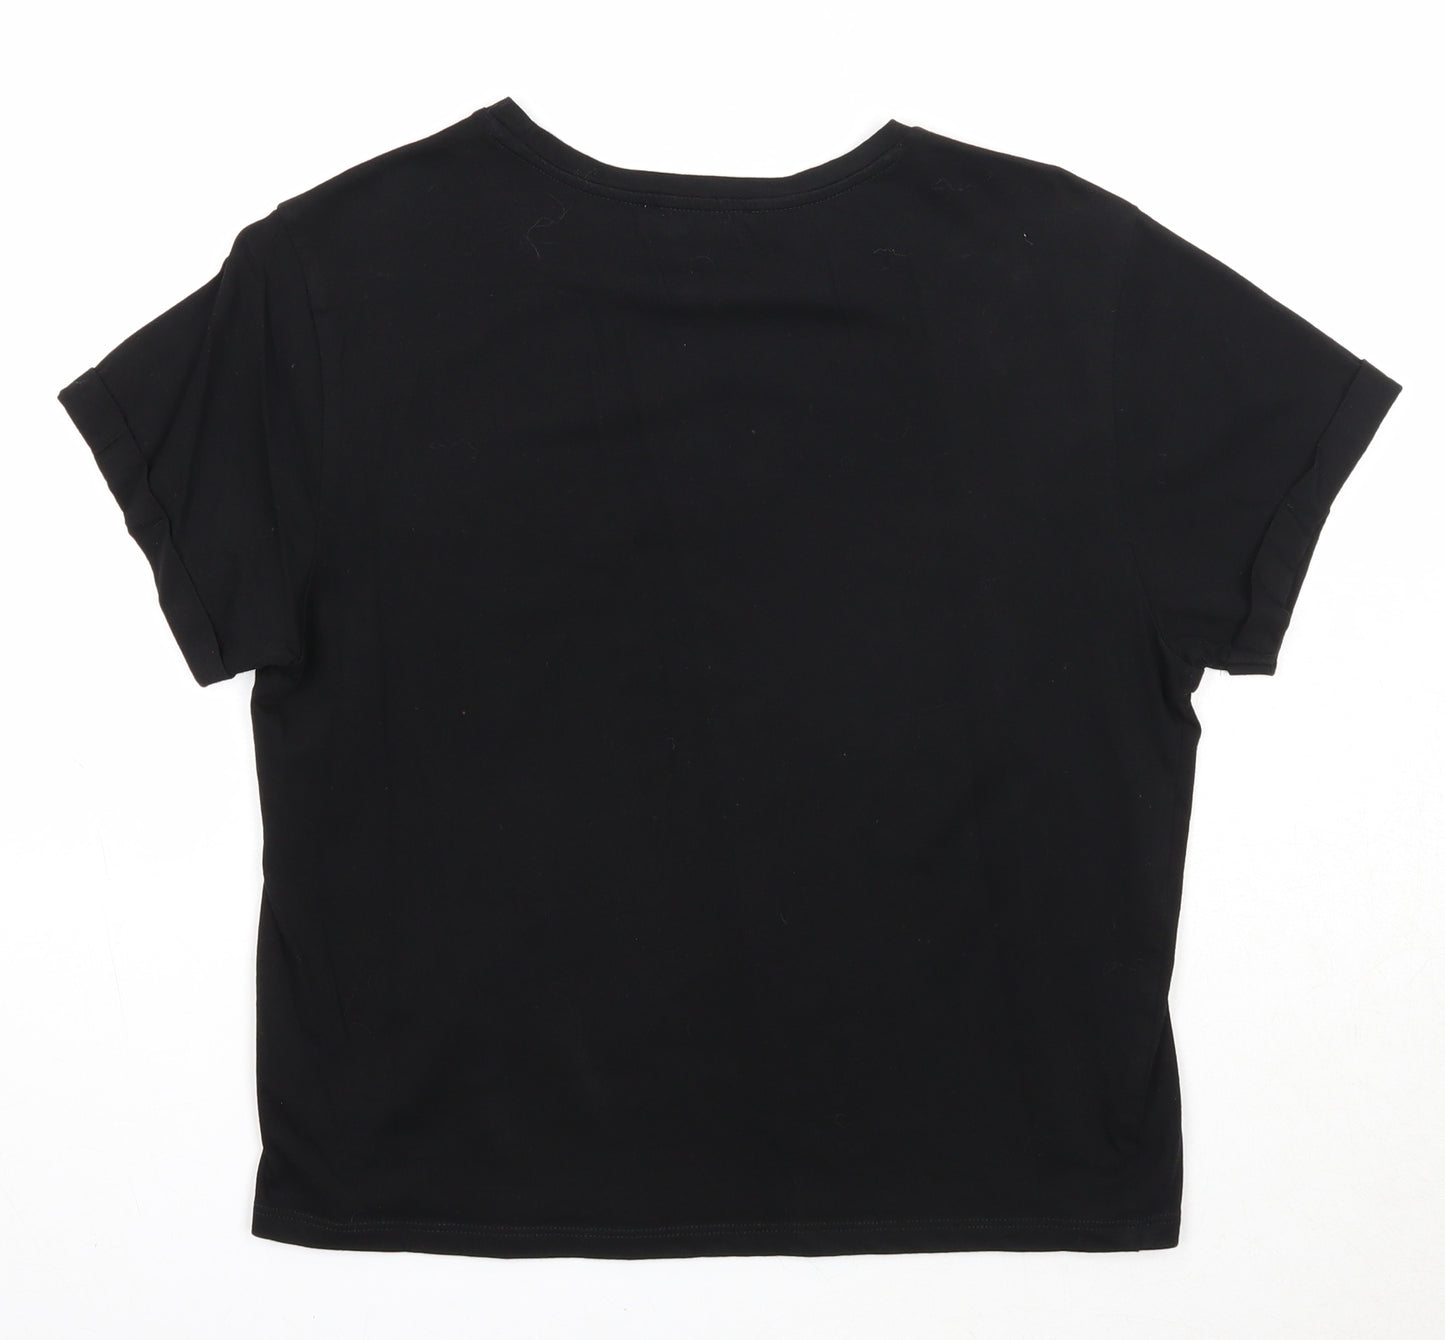 New Look Girls Black Cotton Basic T-Shirt Size L Round Neck Pullover - Koala Not My Problem